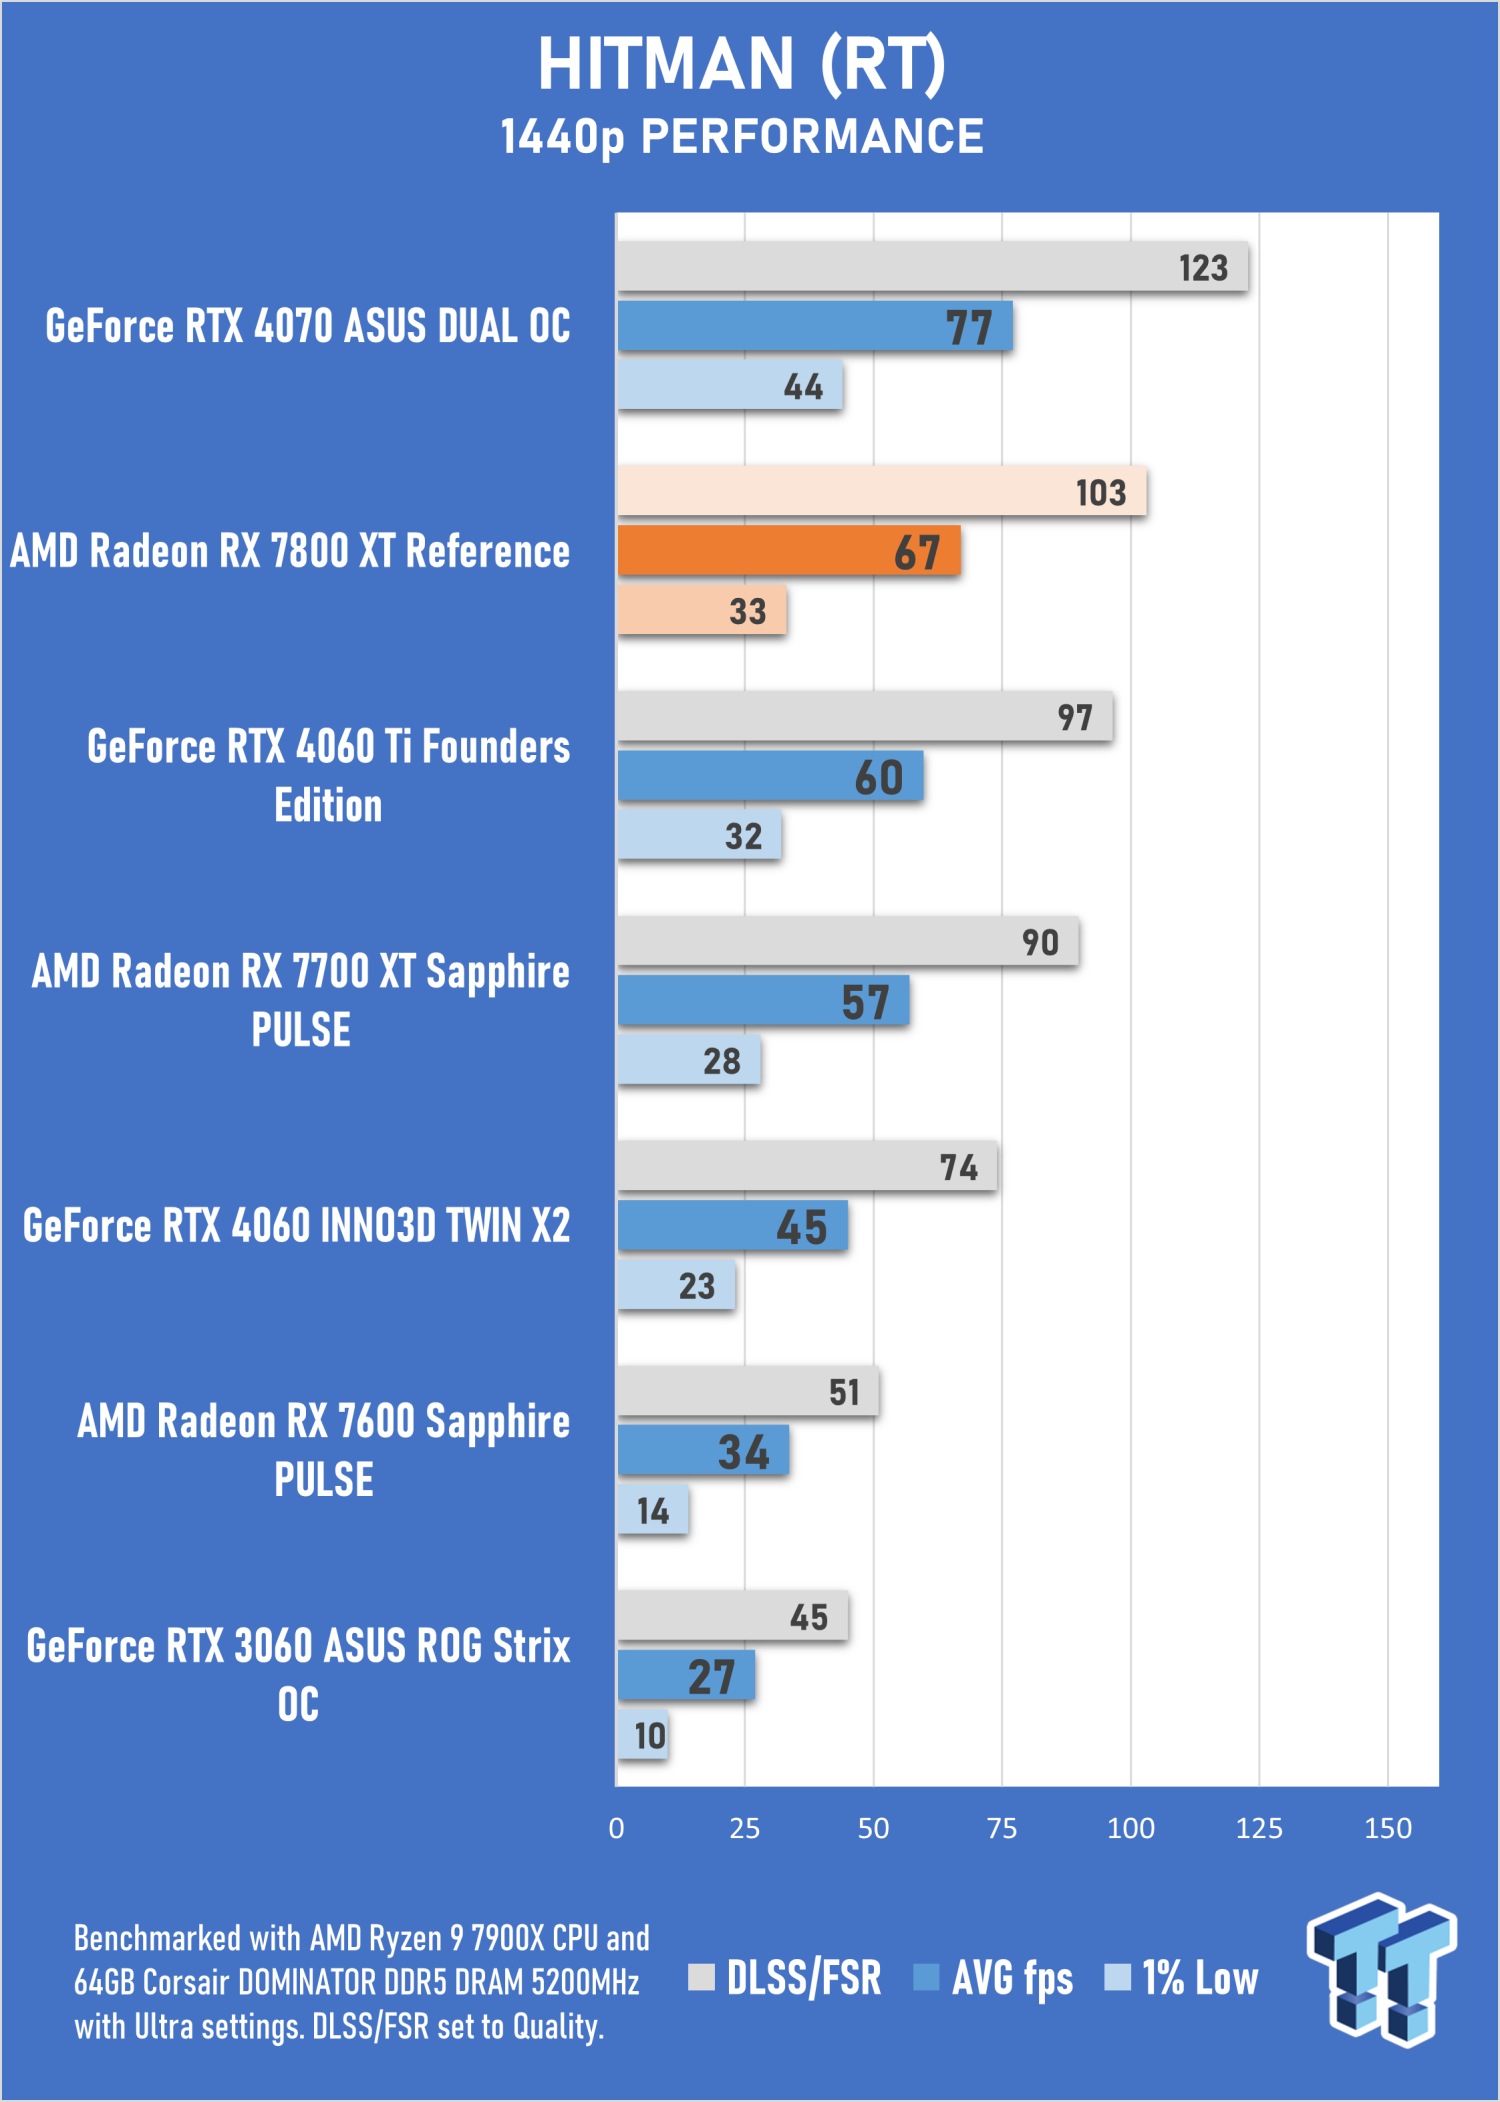 PS5 Pro pode ter desempenho equivalente ao da Radeon RX 7800 XT